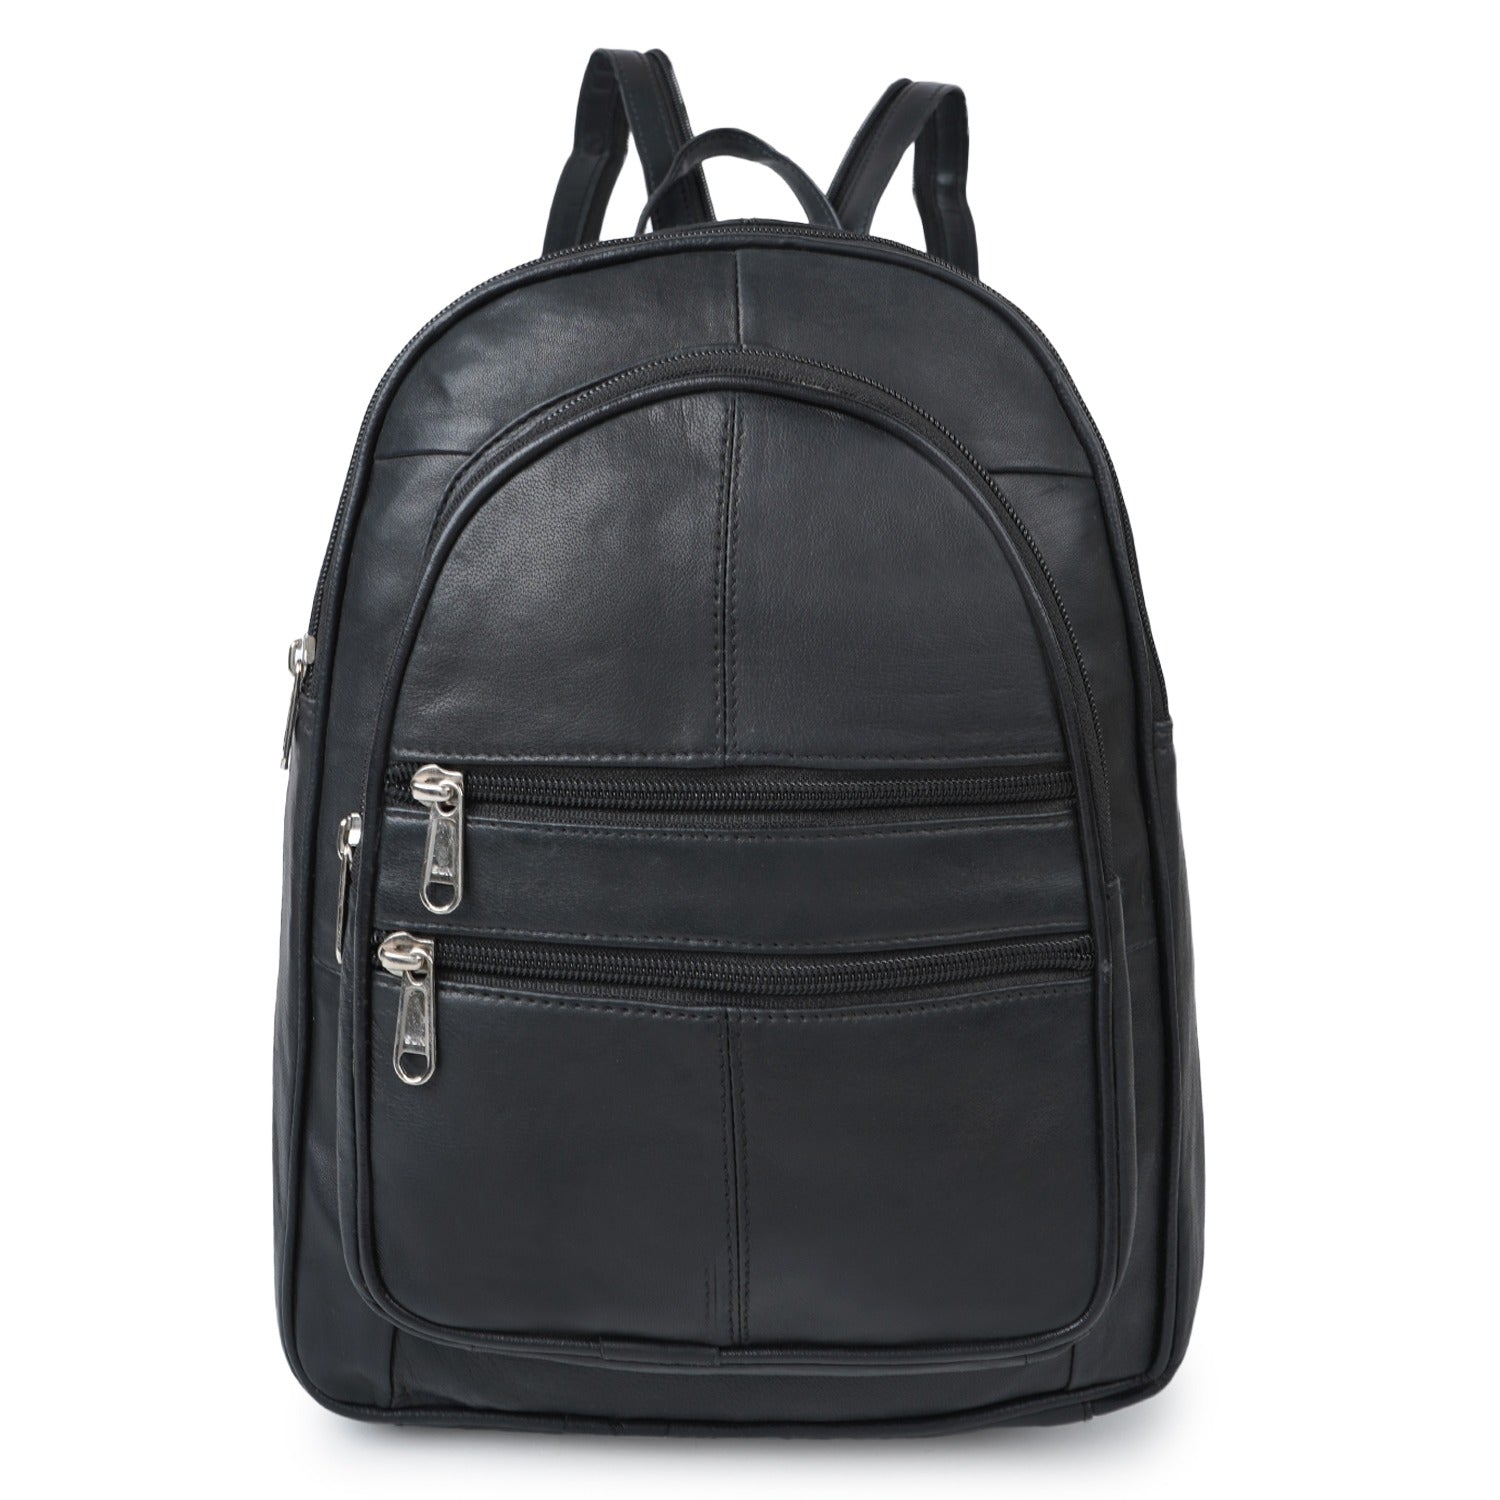 CIMONI Brand Premium Original Leather Backpack